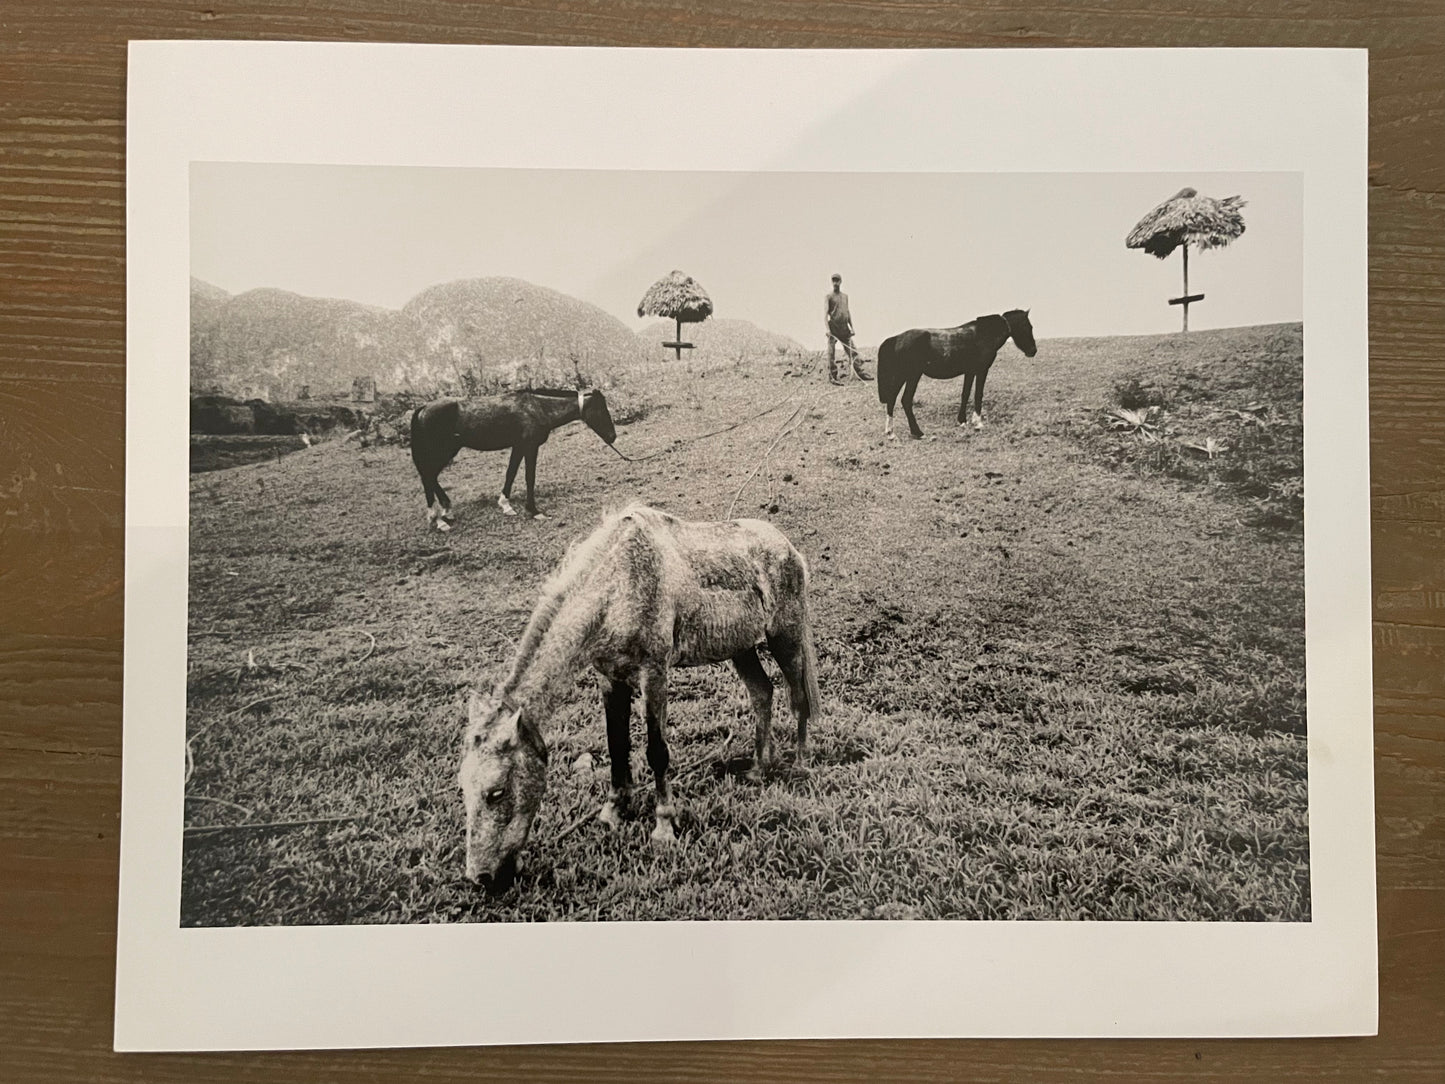 Susan S. Bank (American, 20th c.) Cuba Photograph Print Campo 8x10 three horses